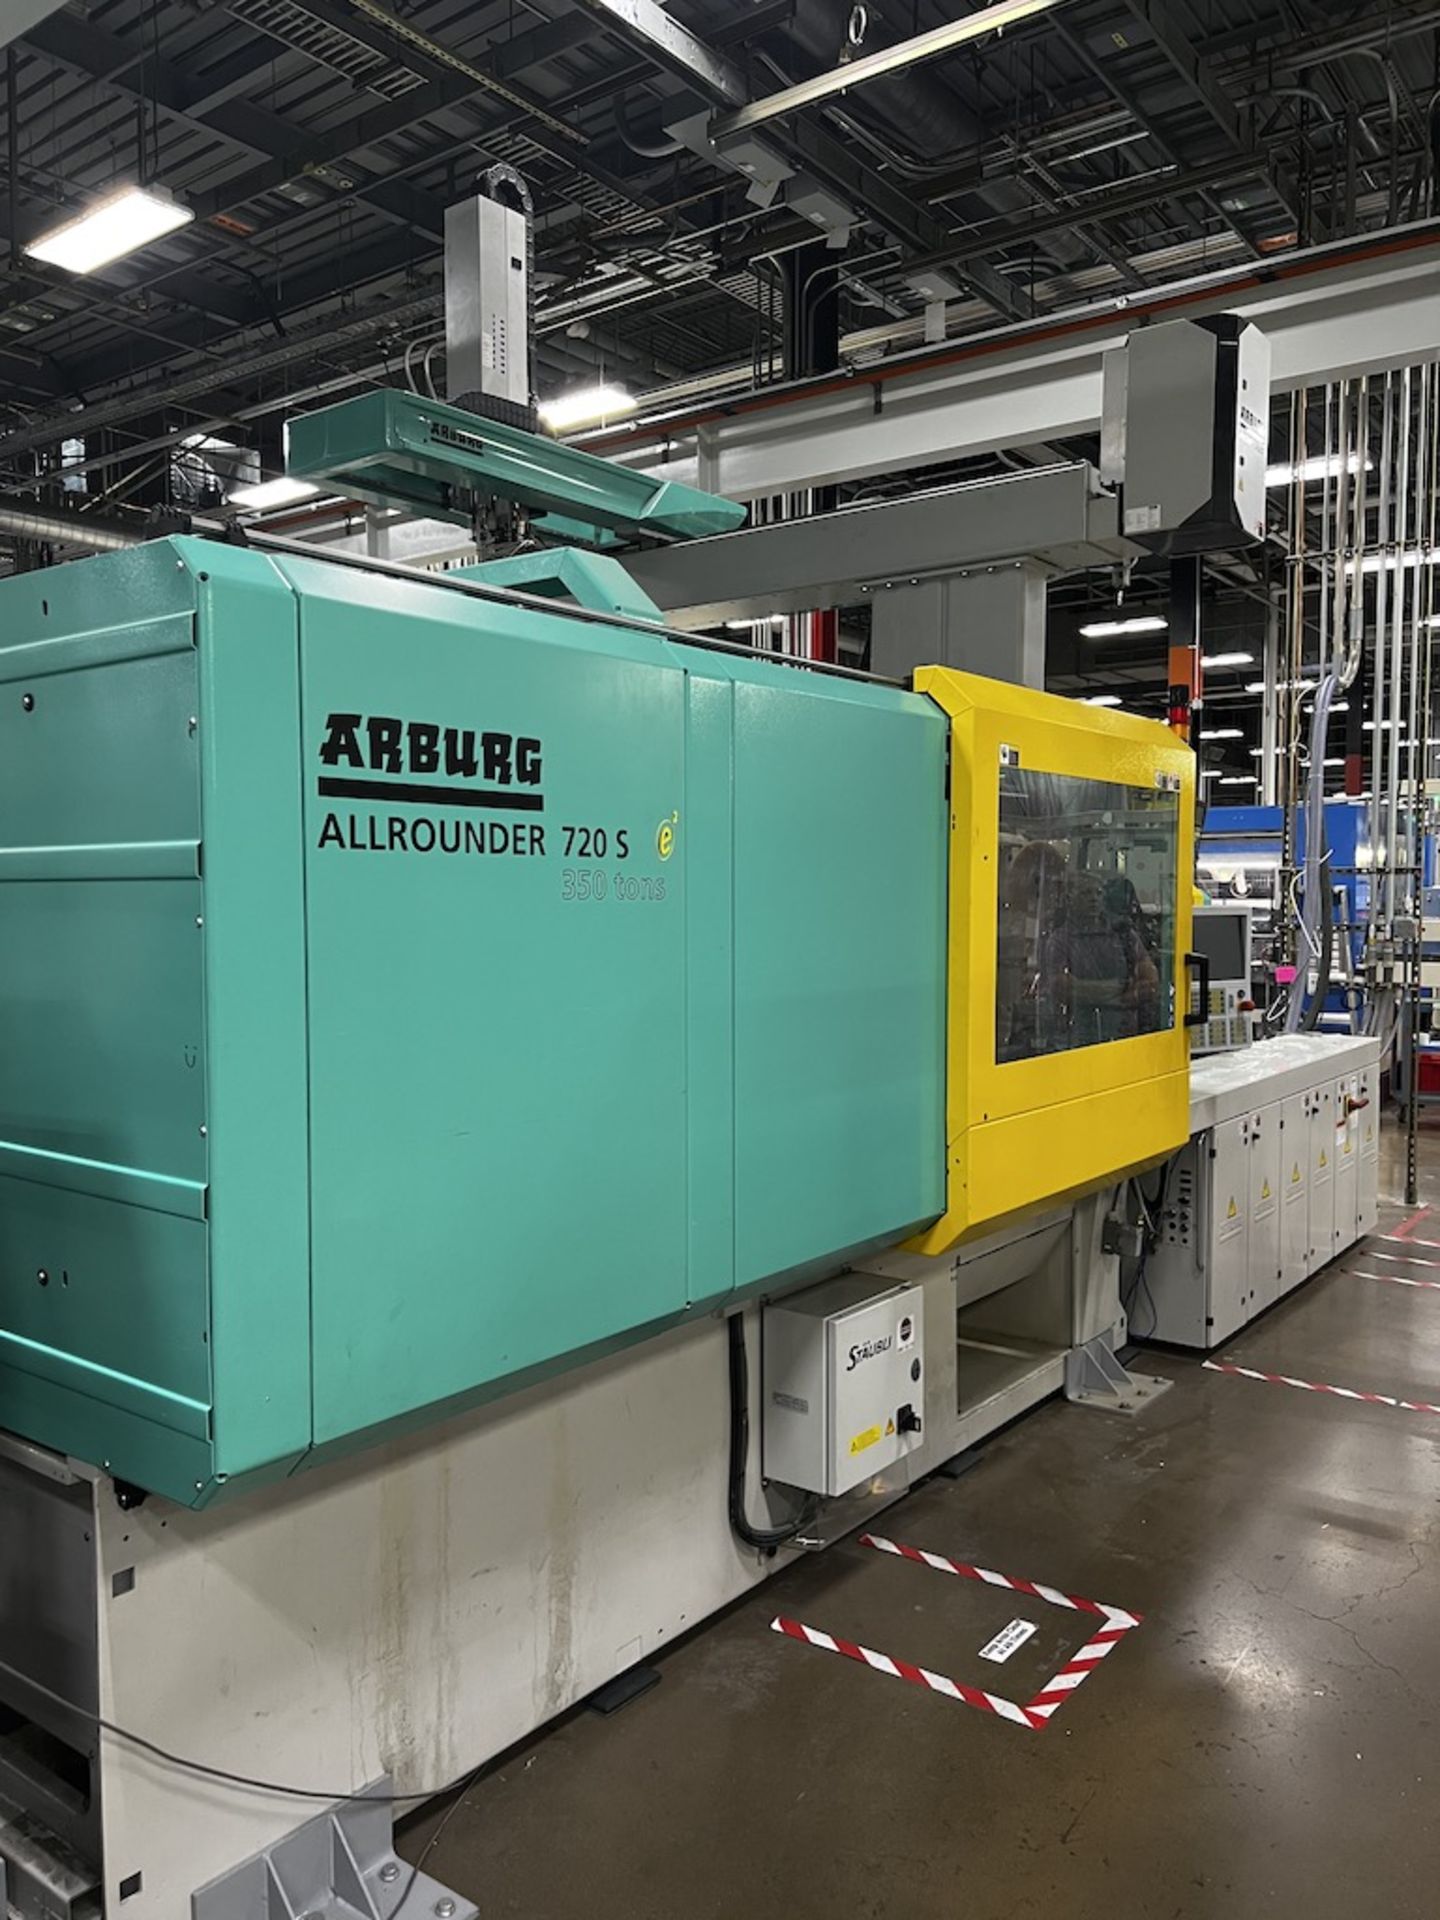 Arburg 320 Metric Ton Injection Molding Press w/Arburg Robot, New in 2015